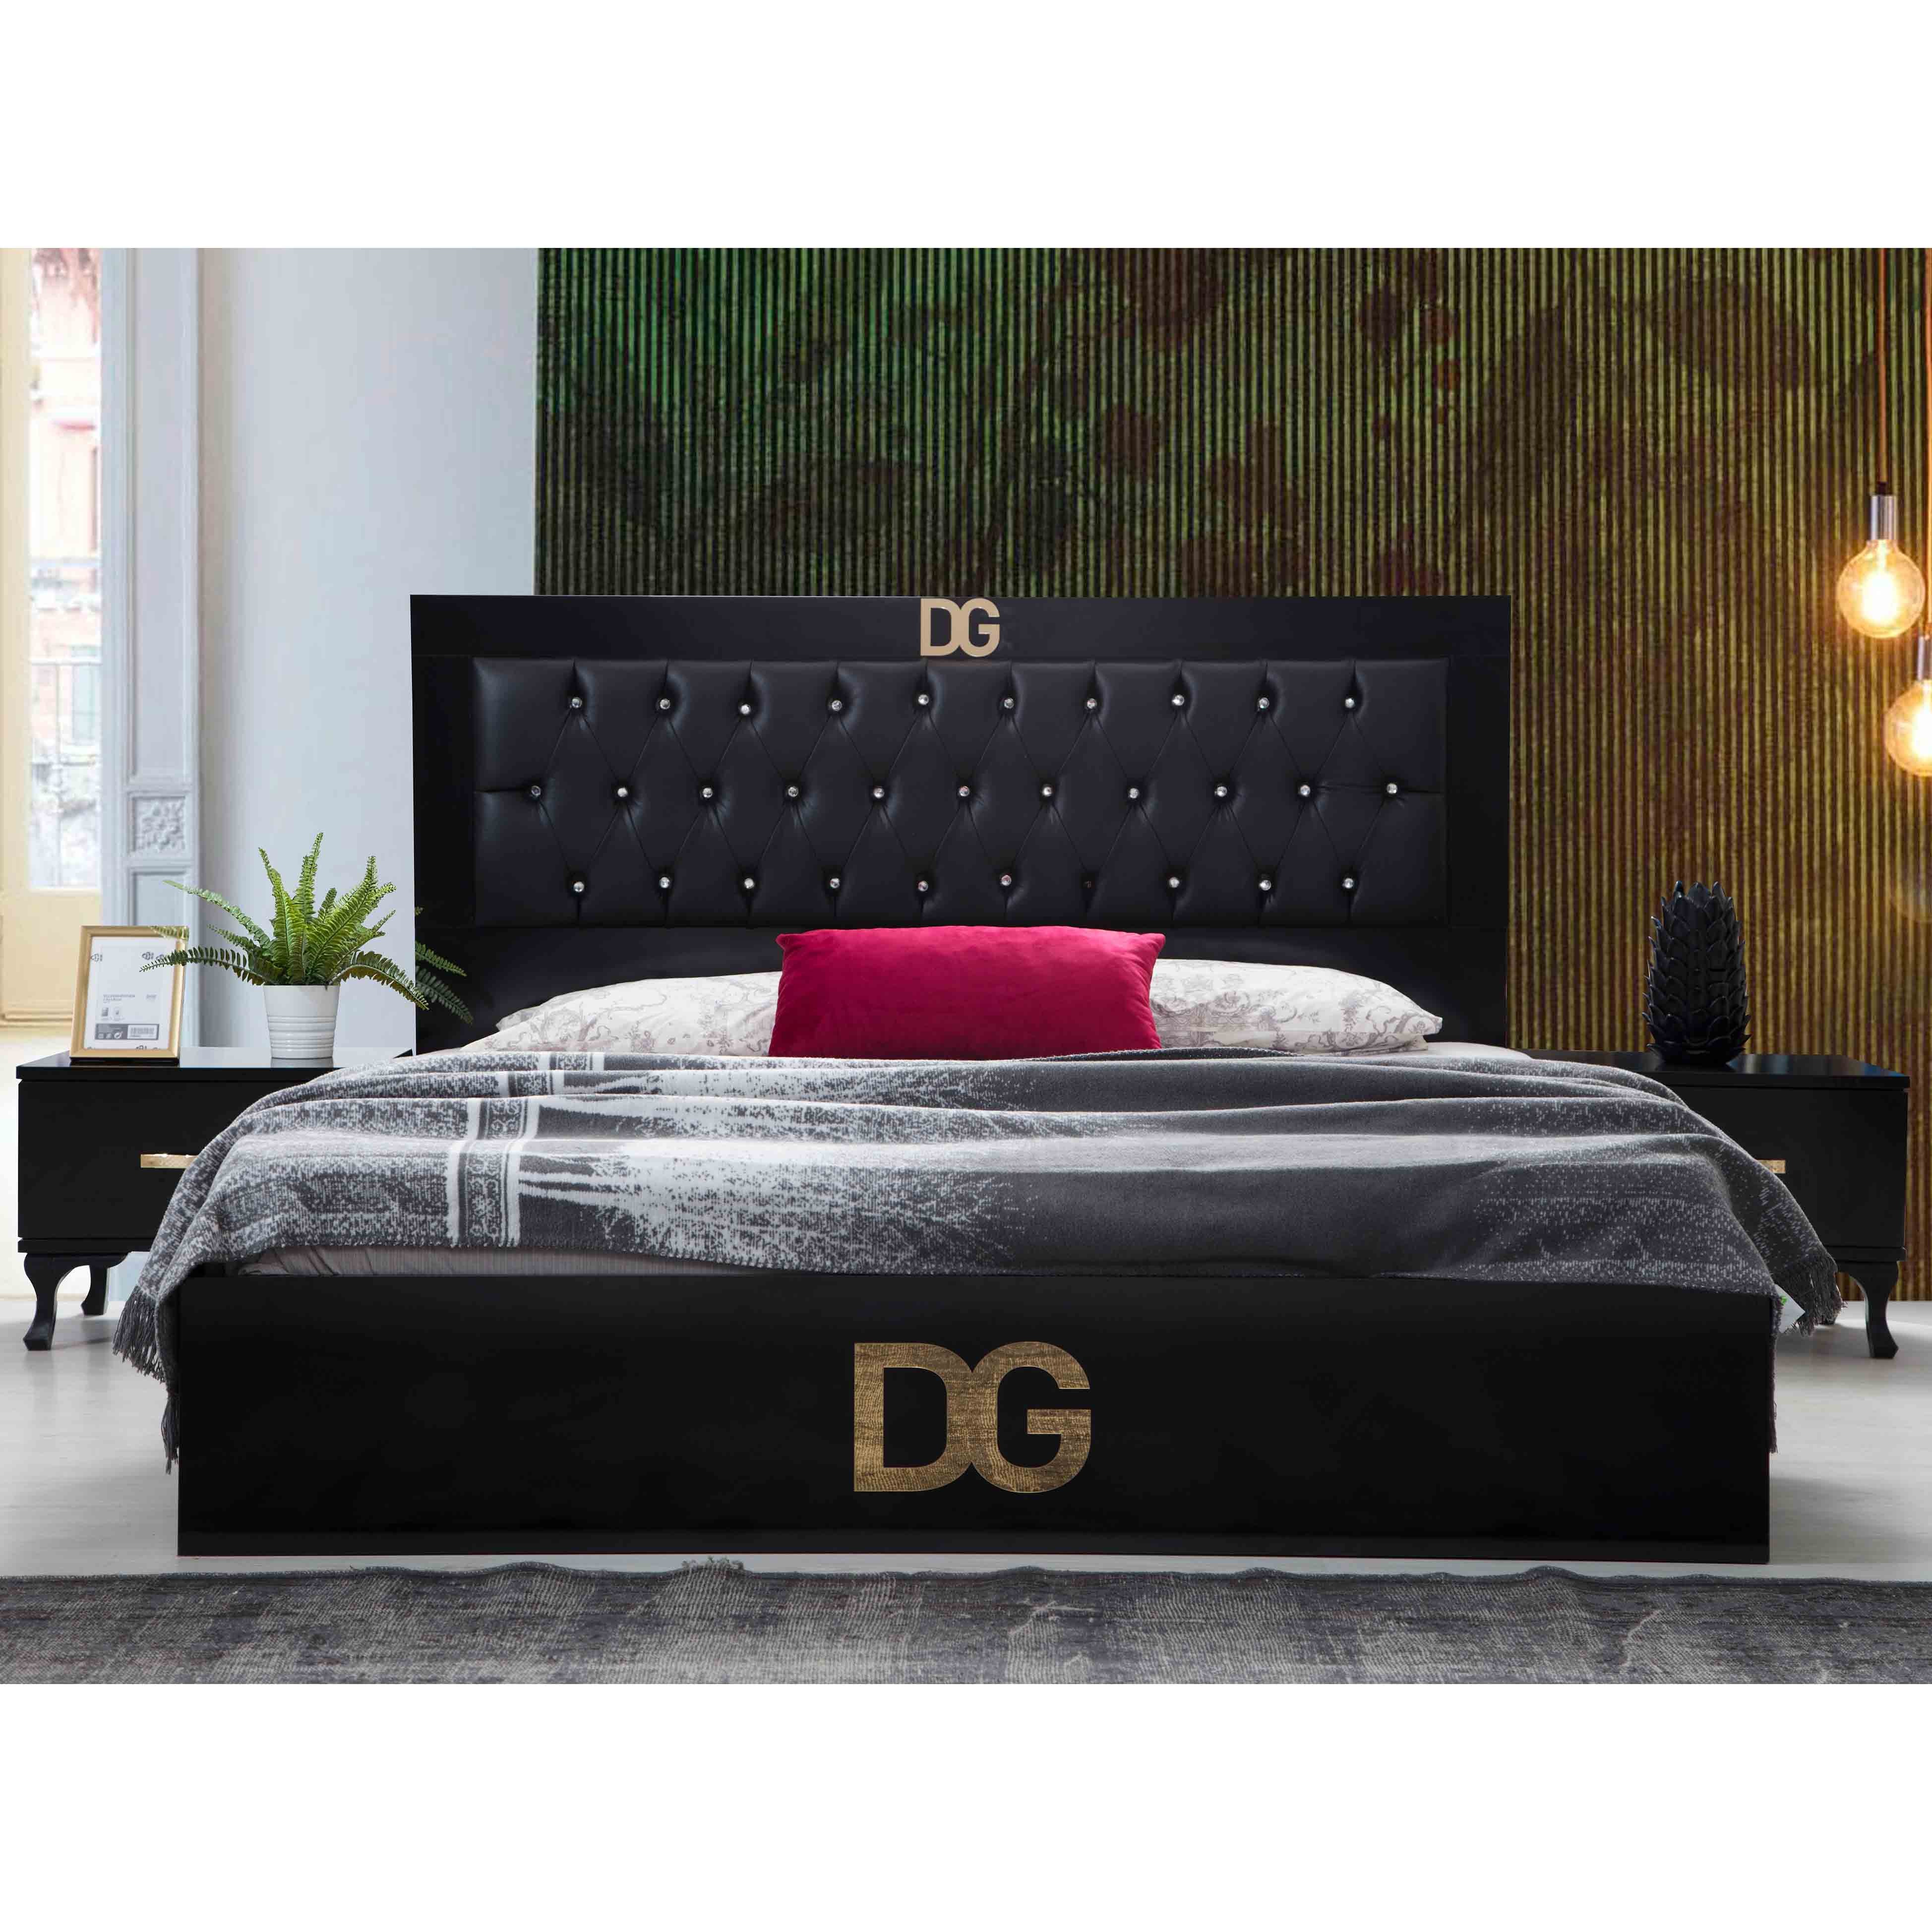 Dg Vol2 Bed With Storage 180x200 cm